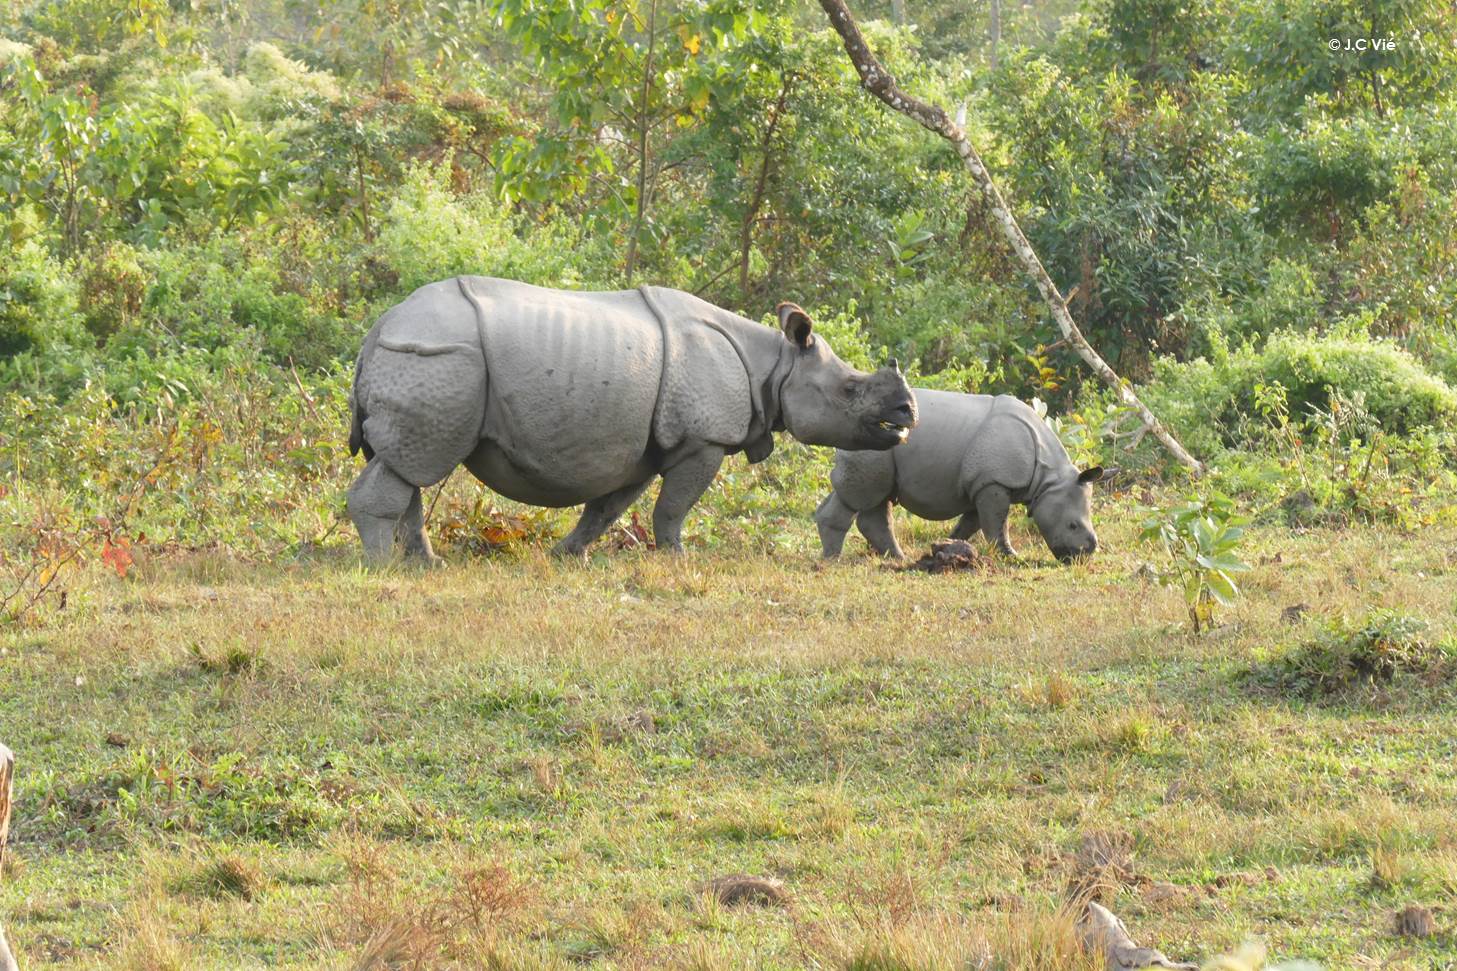 Indian rhinos